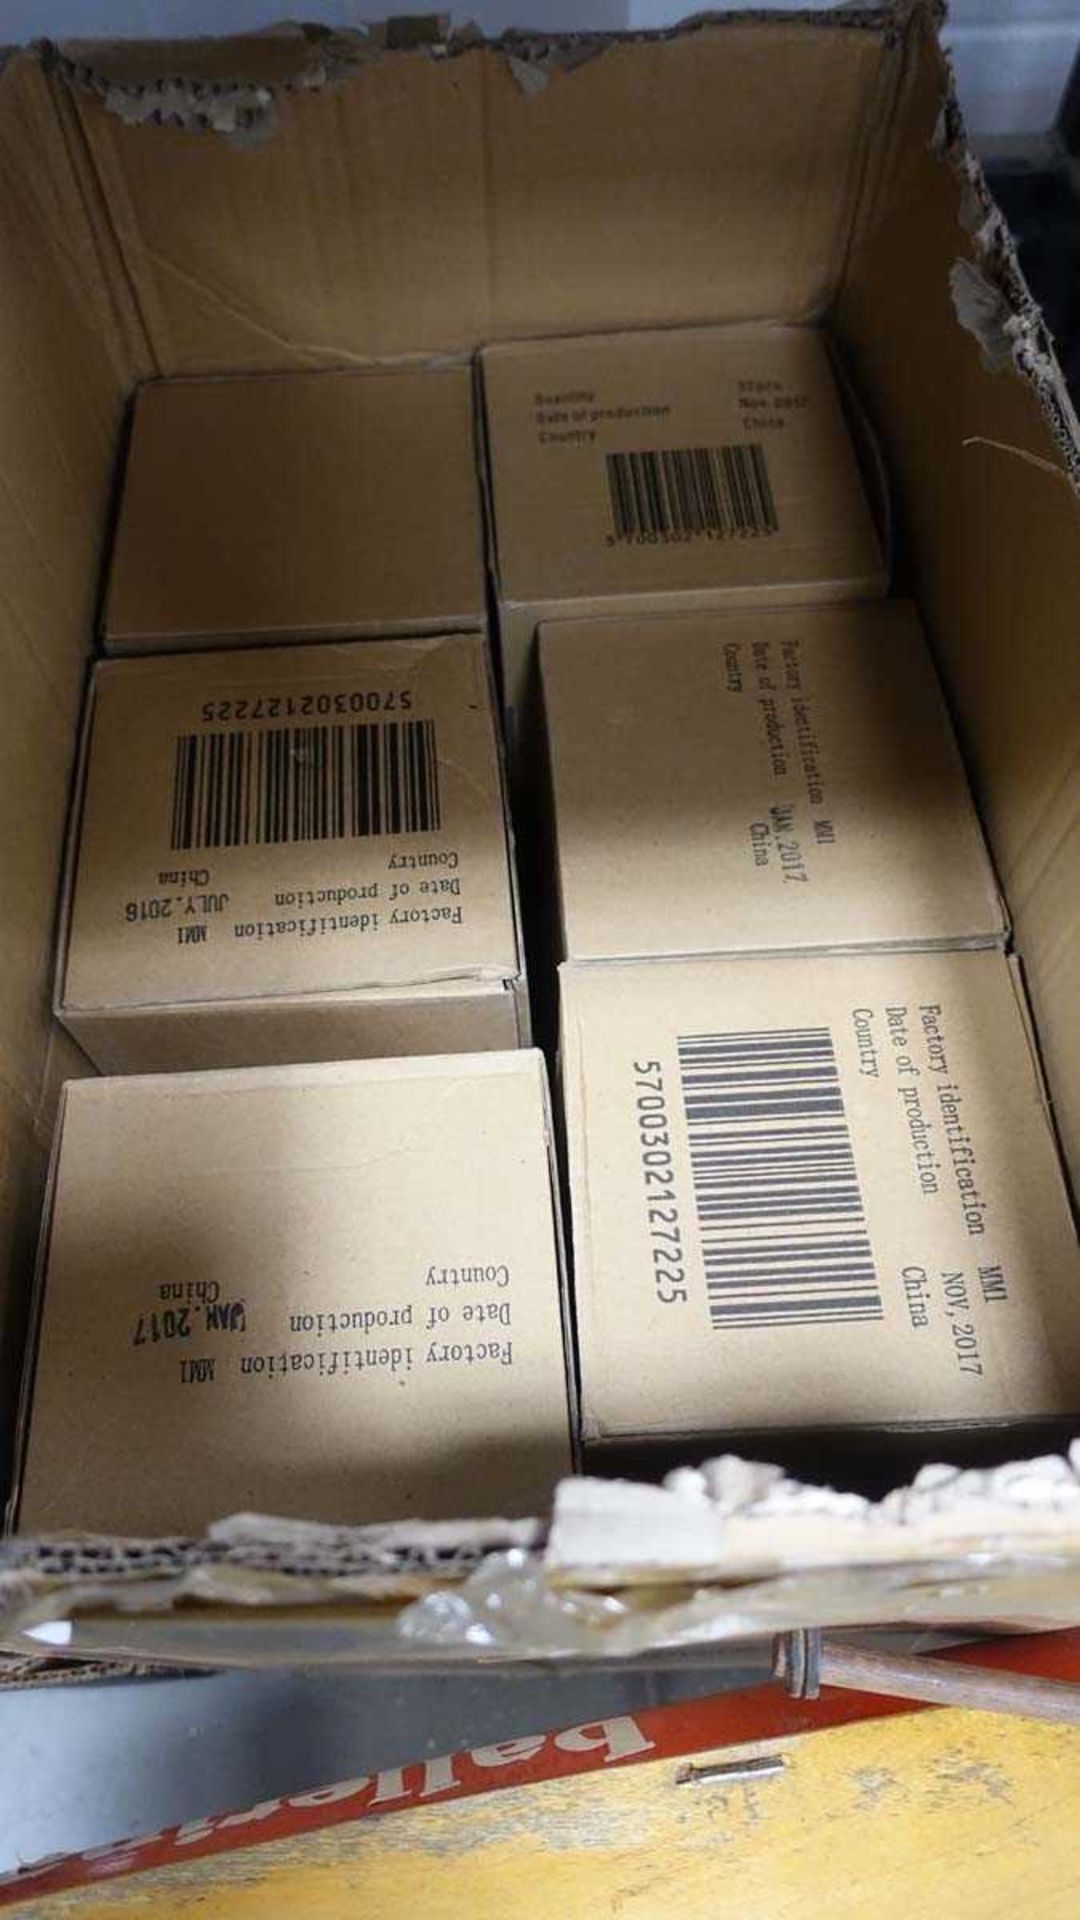 Box containing a quantity of Pandora jewellery case boxes